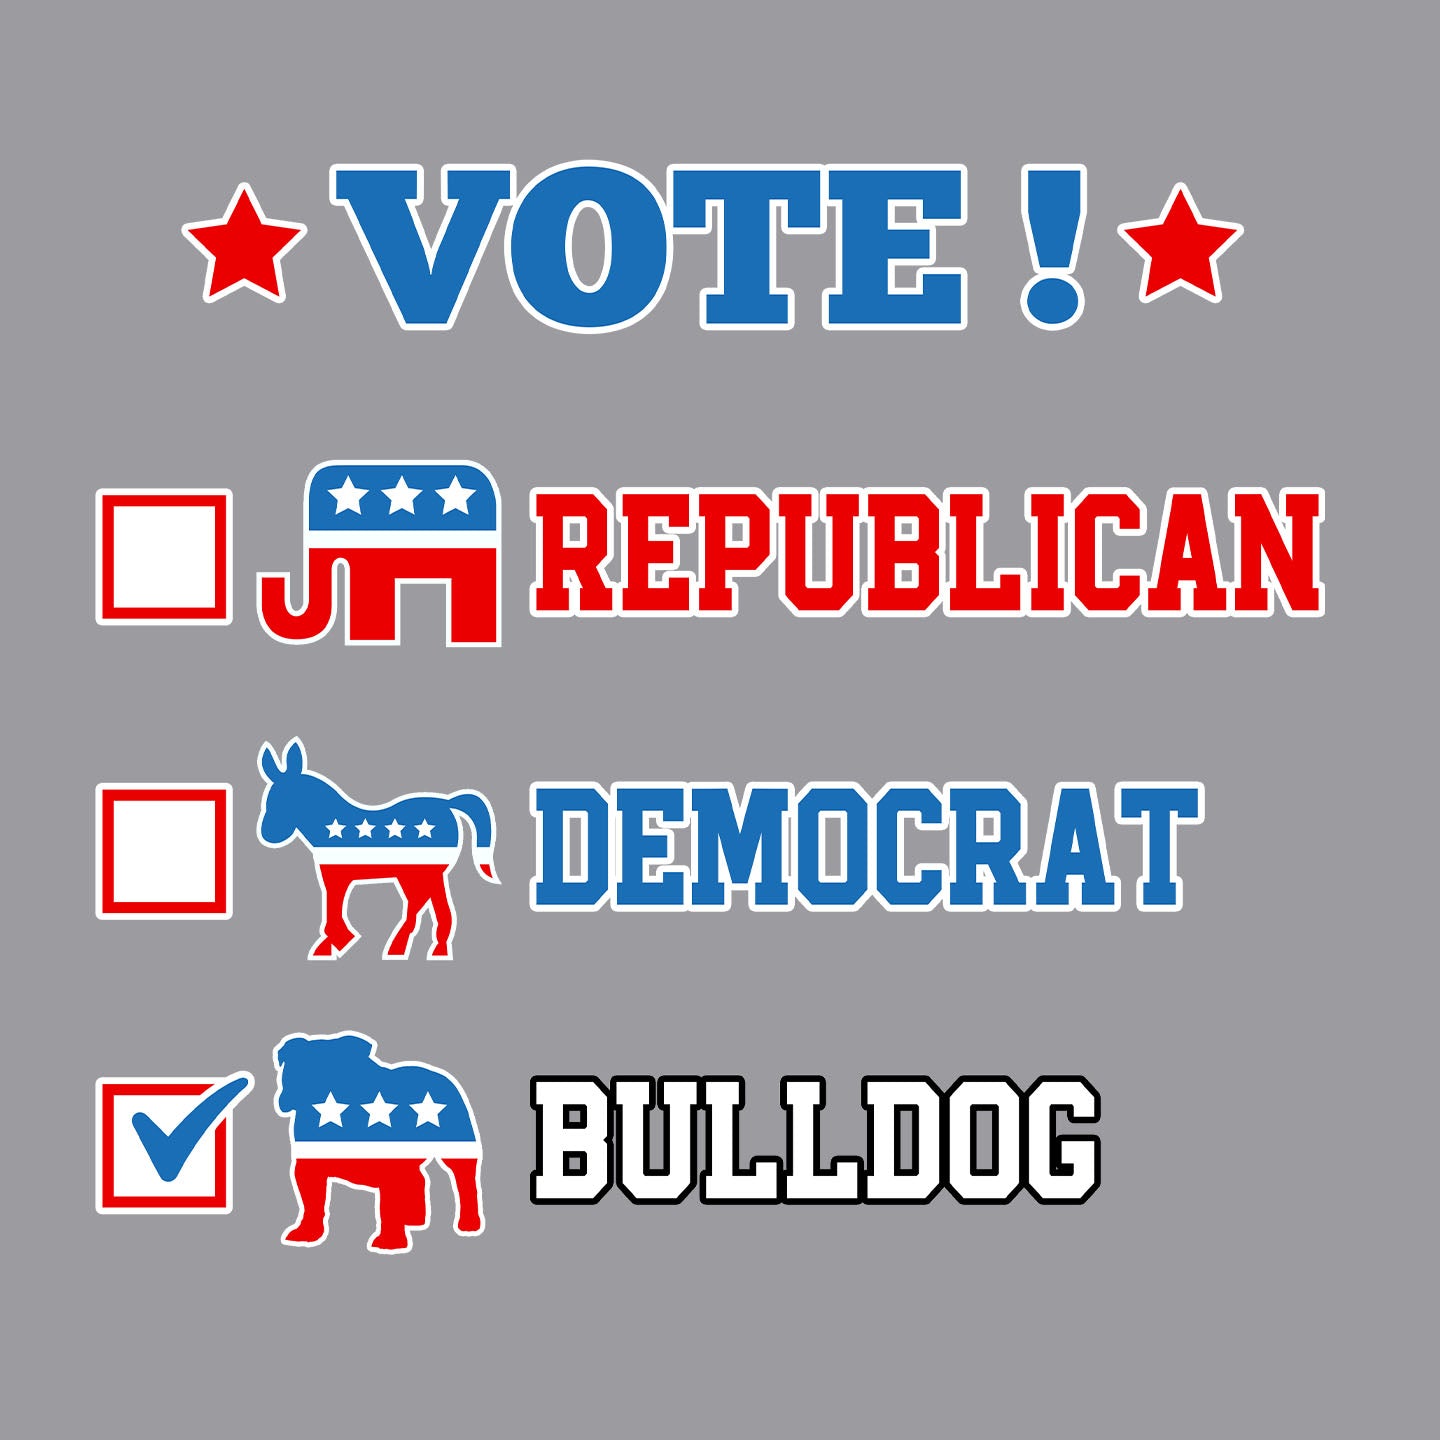 Vote for the Bulldog - Adult Unisex Crewneck Sweatshirt